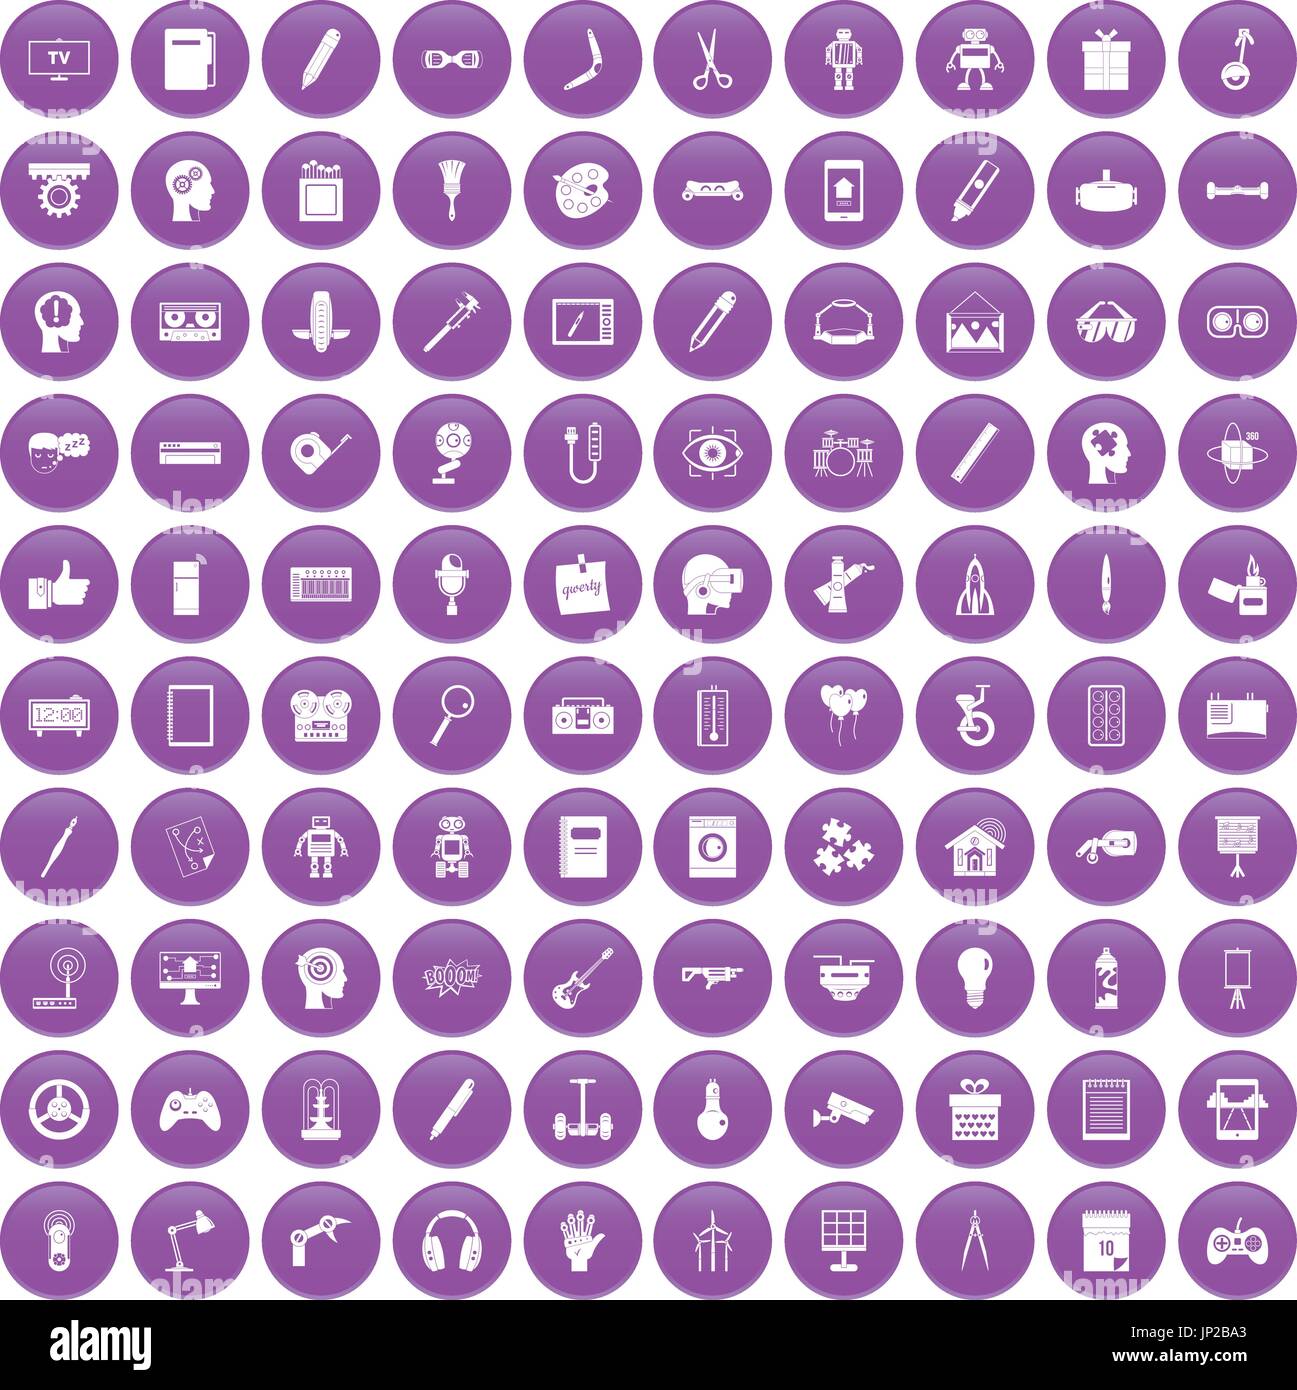 100 kreative Idee Icons set lila Stock Vektor